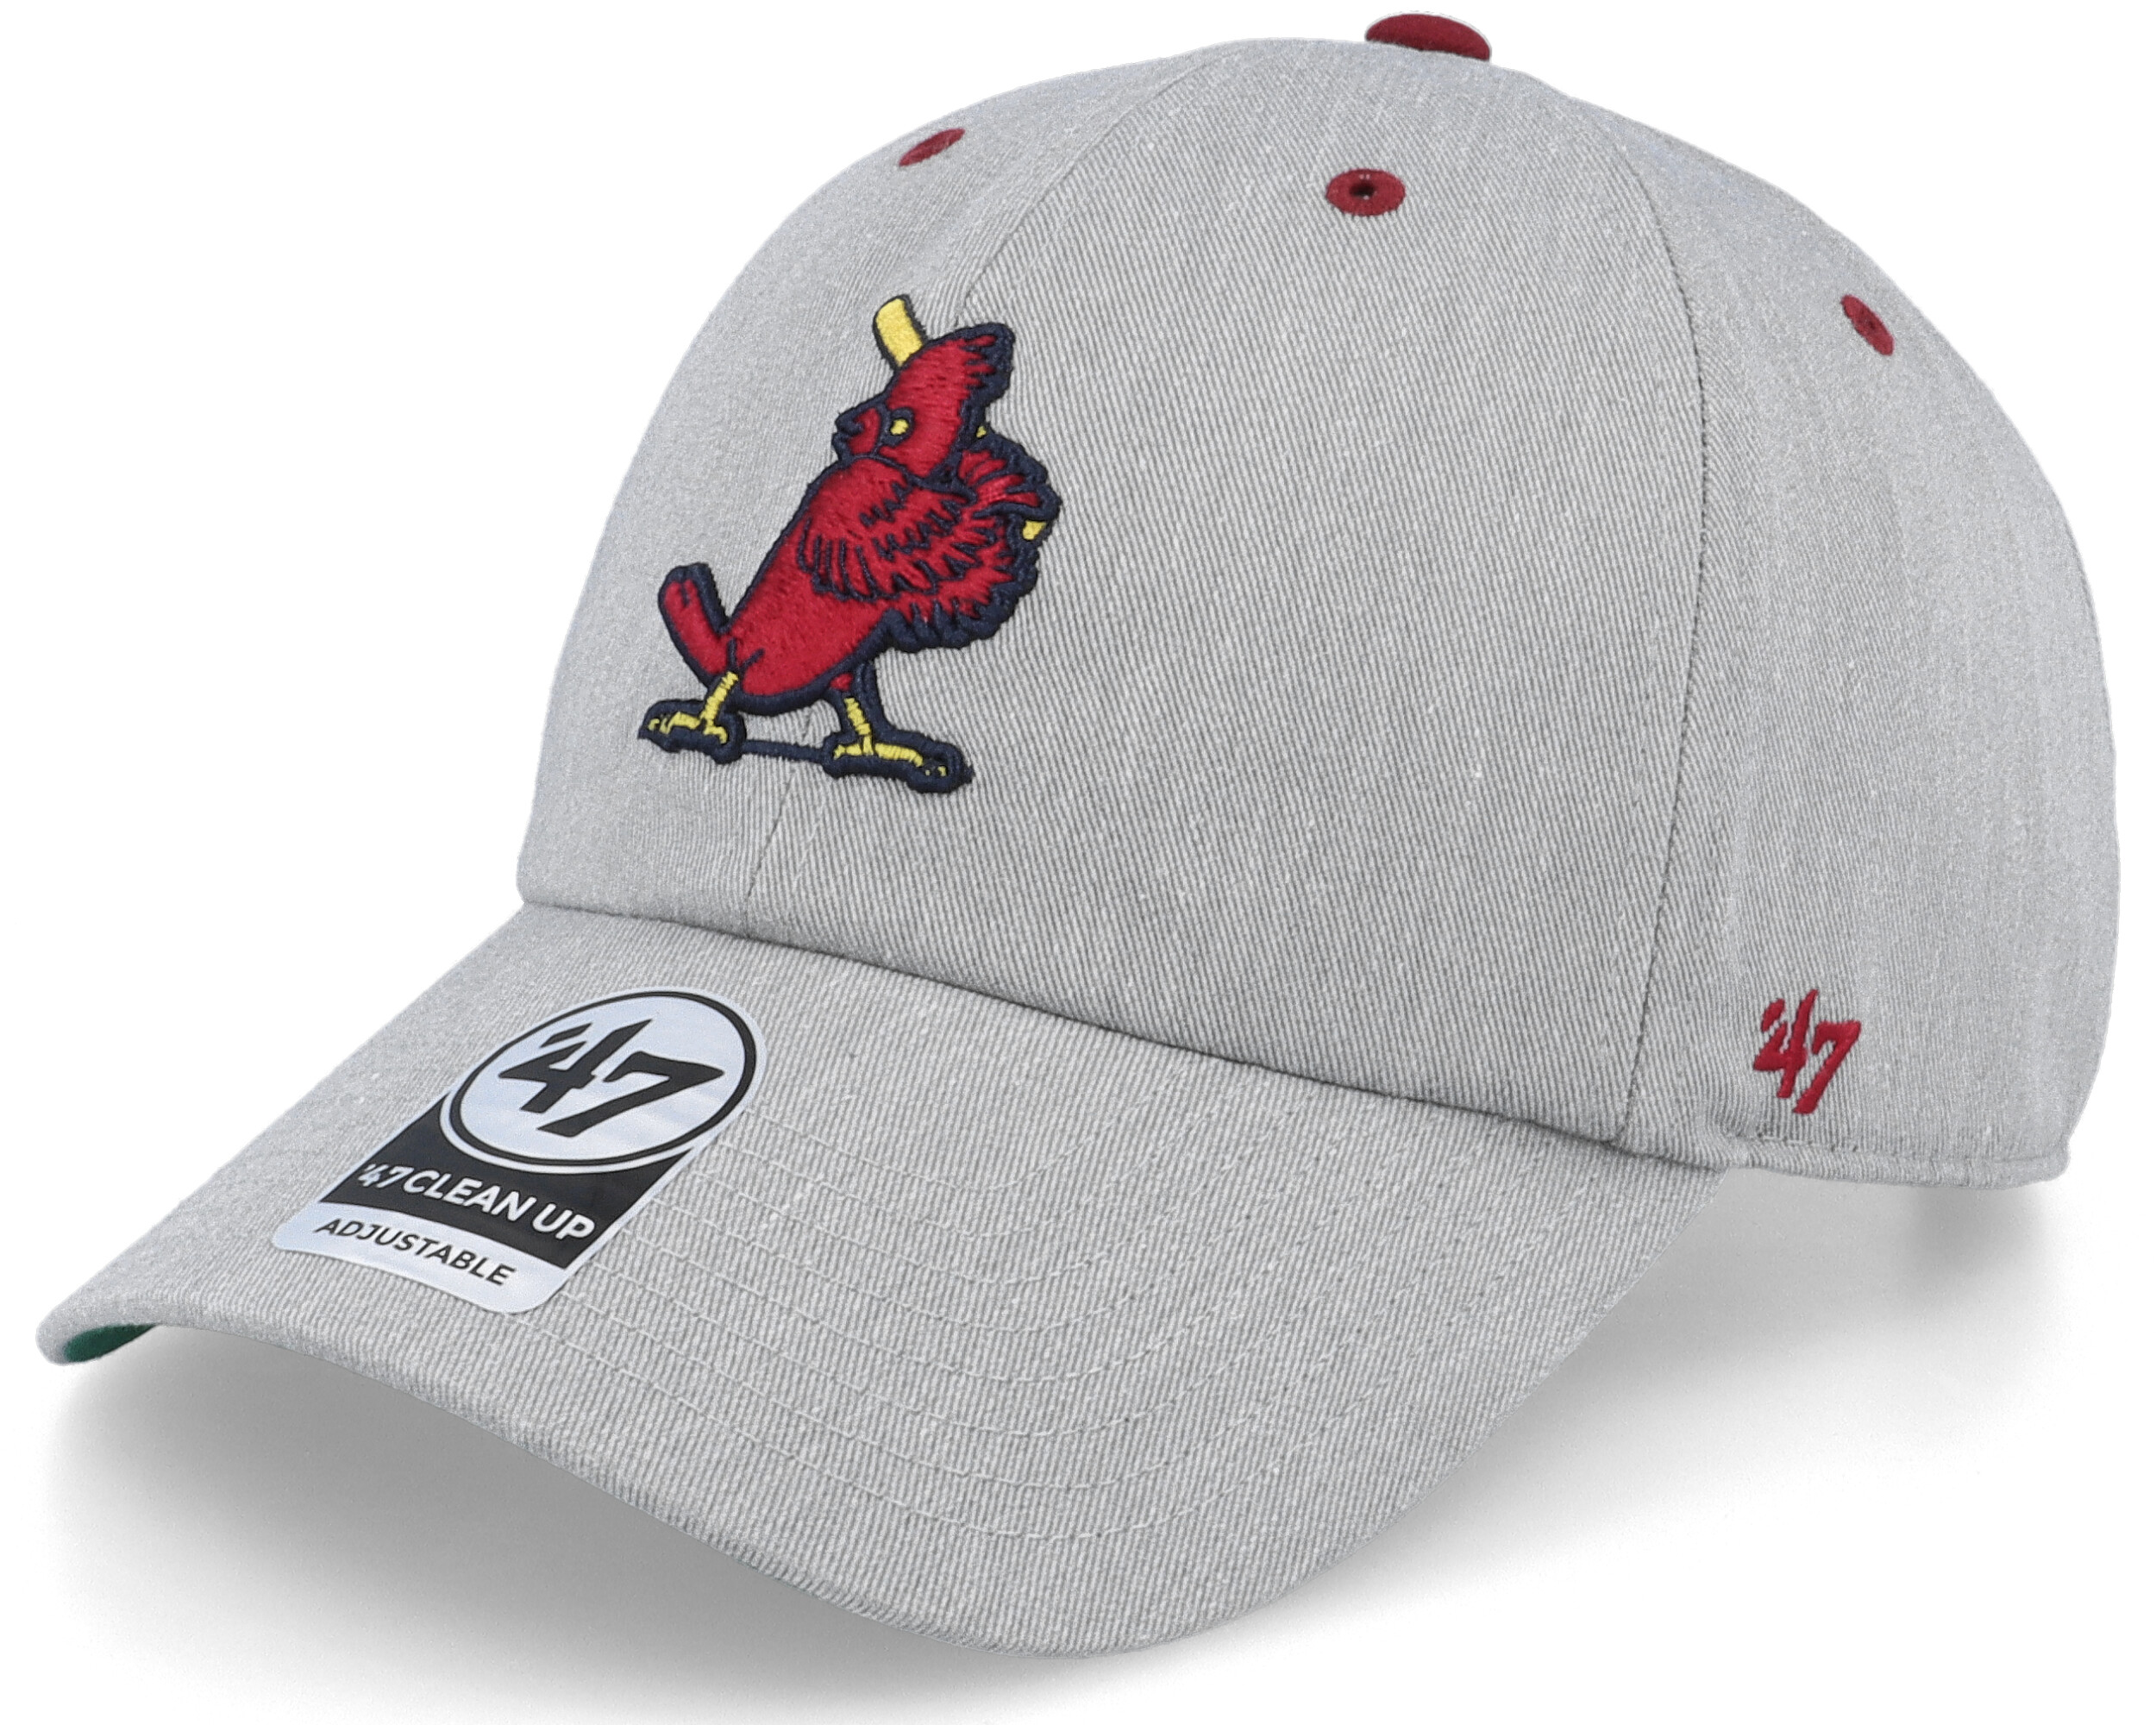  '47 Brand St. Louis Cardinals Clean Up Adjustable Hat